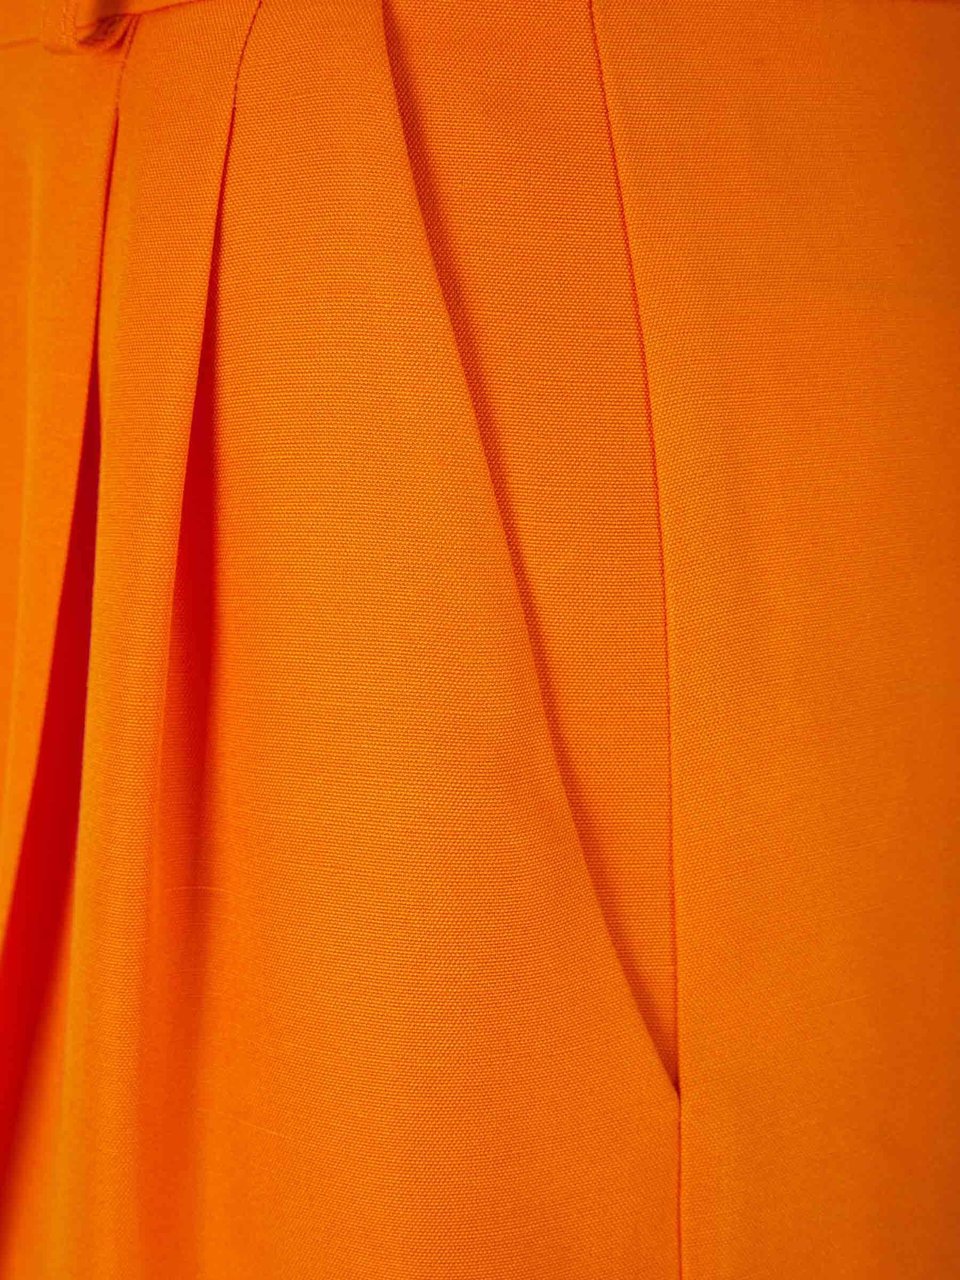 Stella McCartney Viscose Culotte Pants Oranje